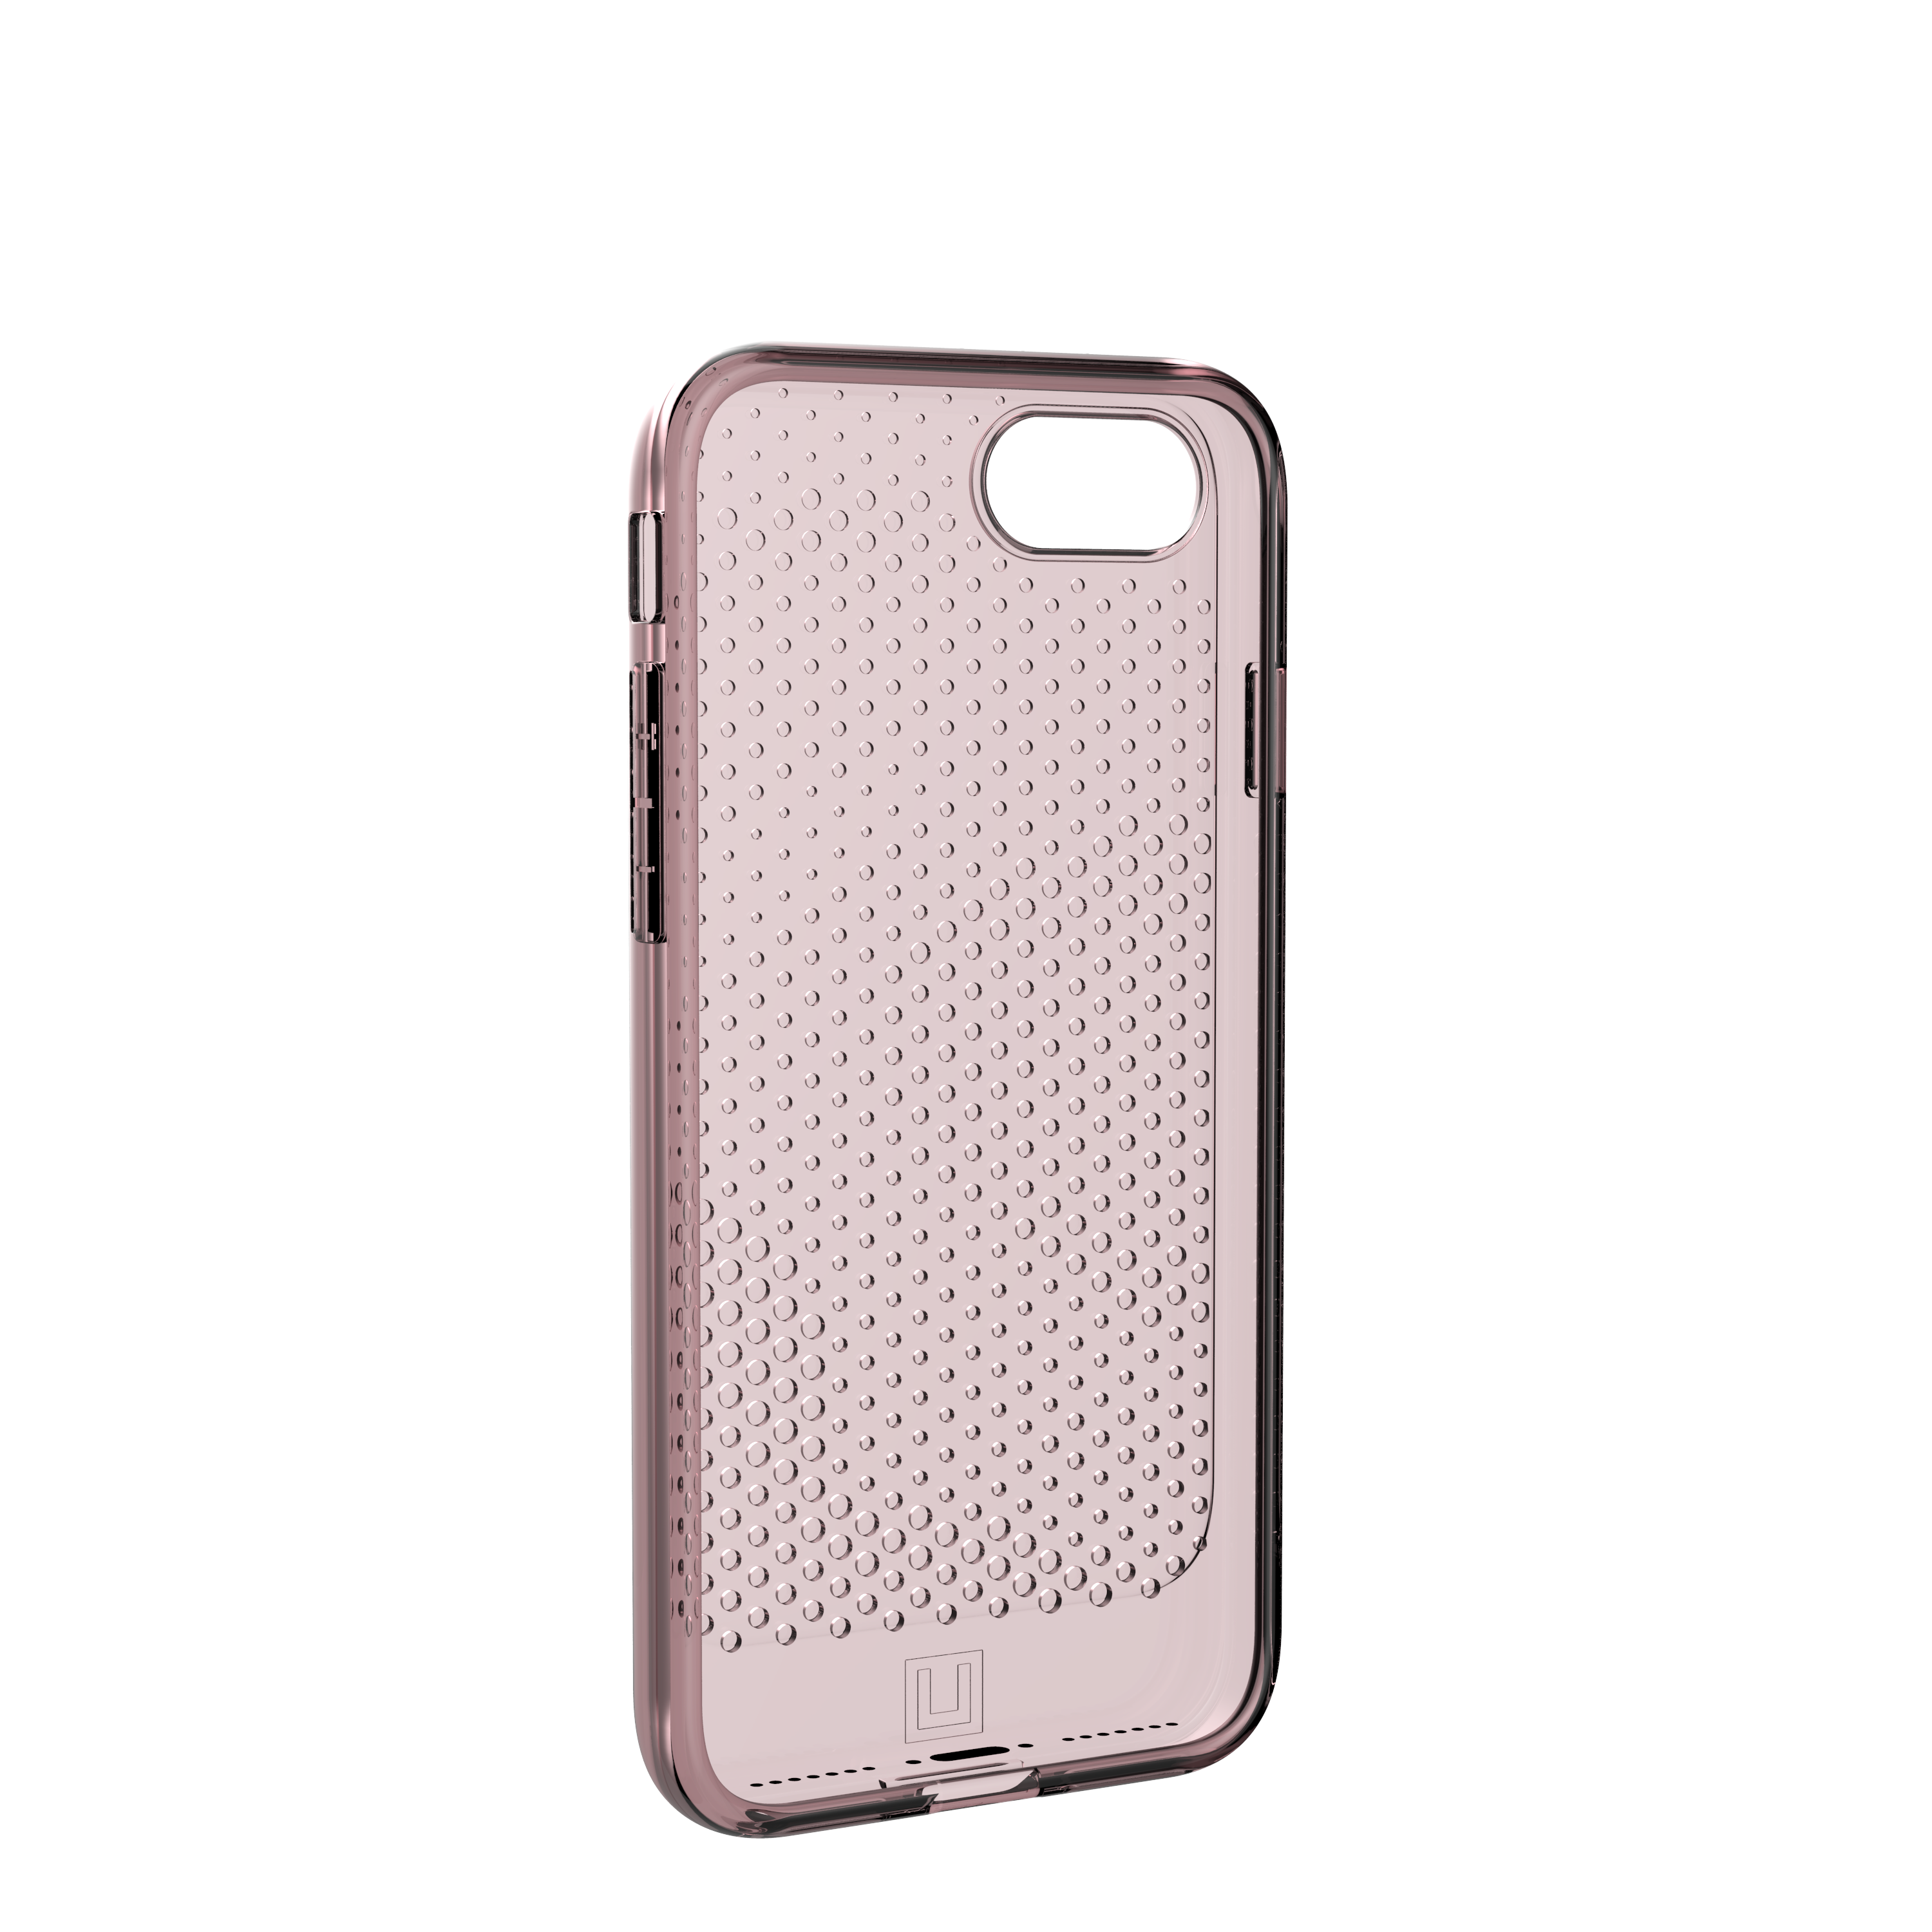 Antecedent Kreet Wolkenkrabber U by UAG Stylish, Sleek, Feather-light, Slim, Premium iPhone 8 / iPhone 7  [4.7-inch screen] Cases & Covers